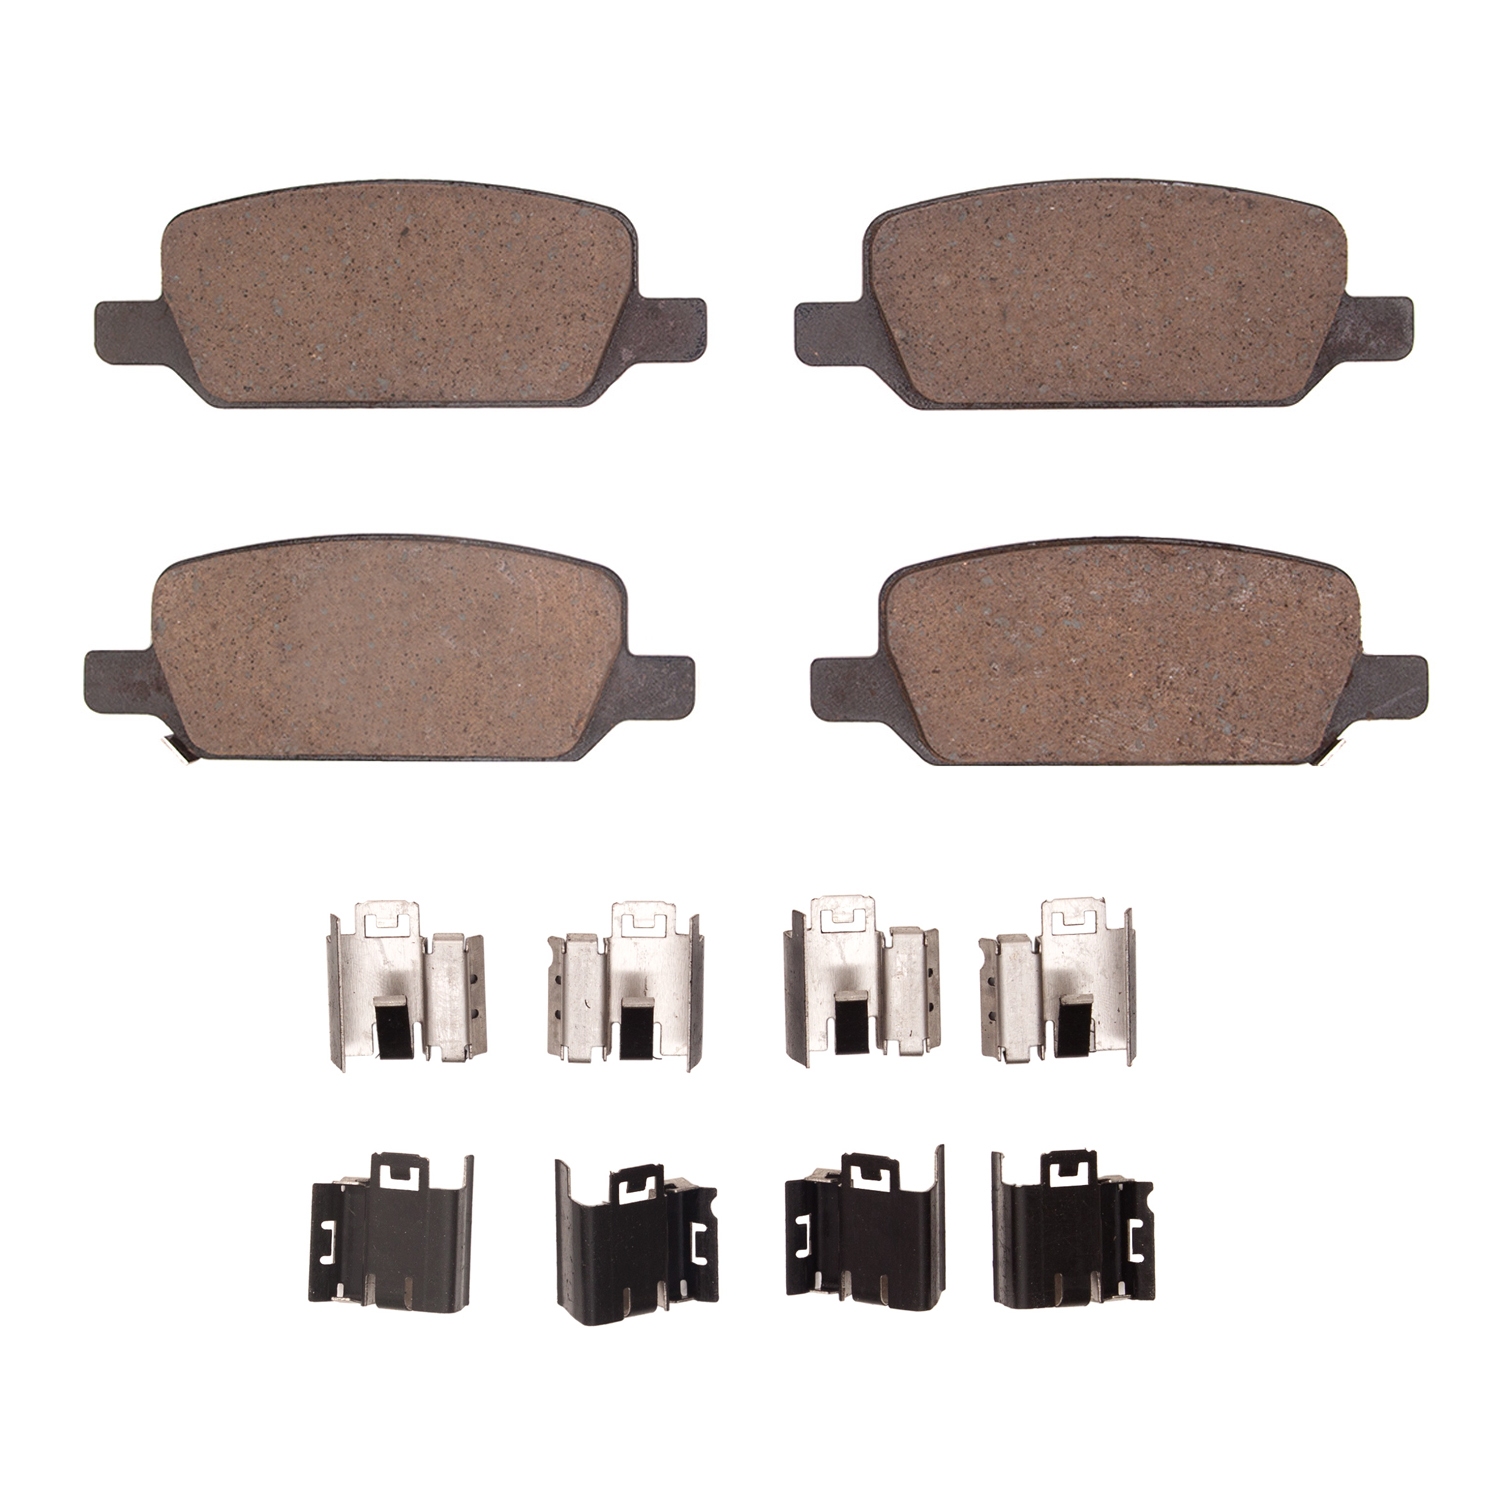 Ceramic Brake Pads & Hardware Kit, Fits Select Tesla, Position: Rear